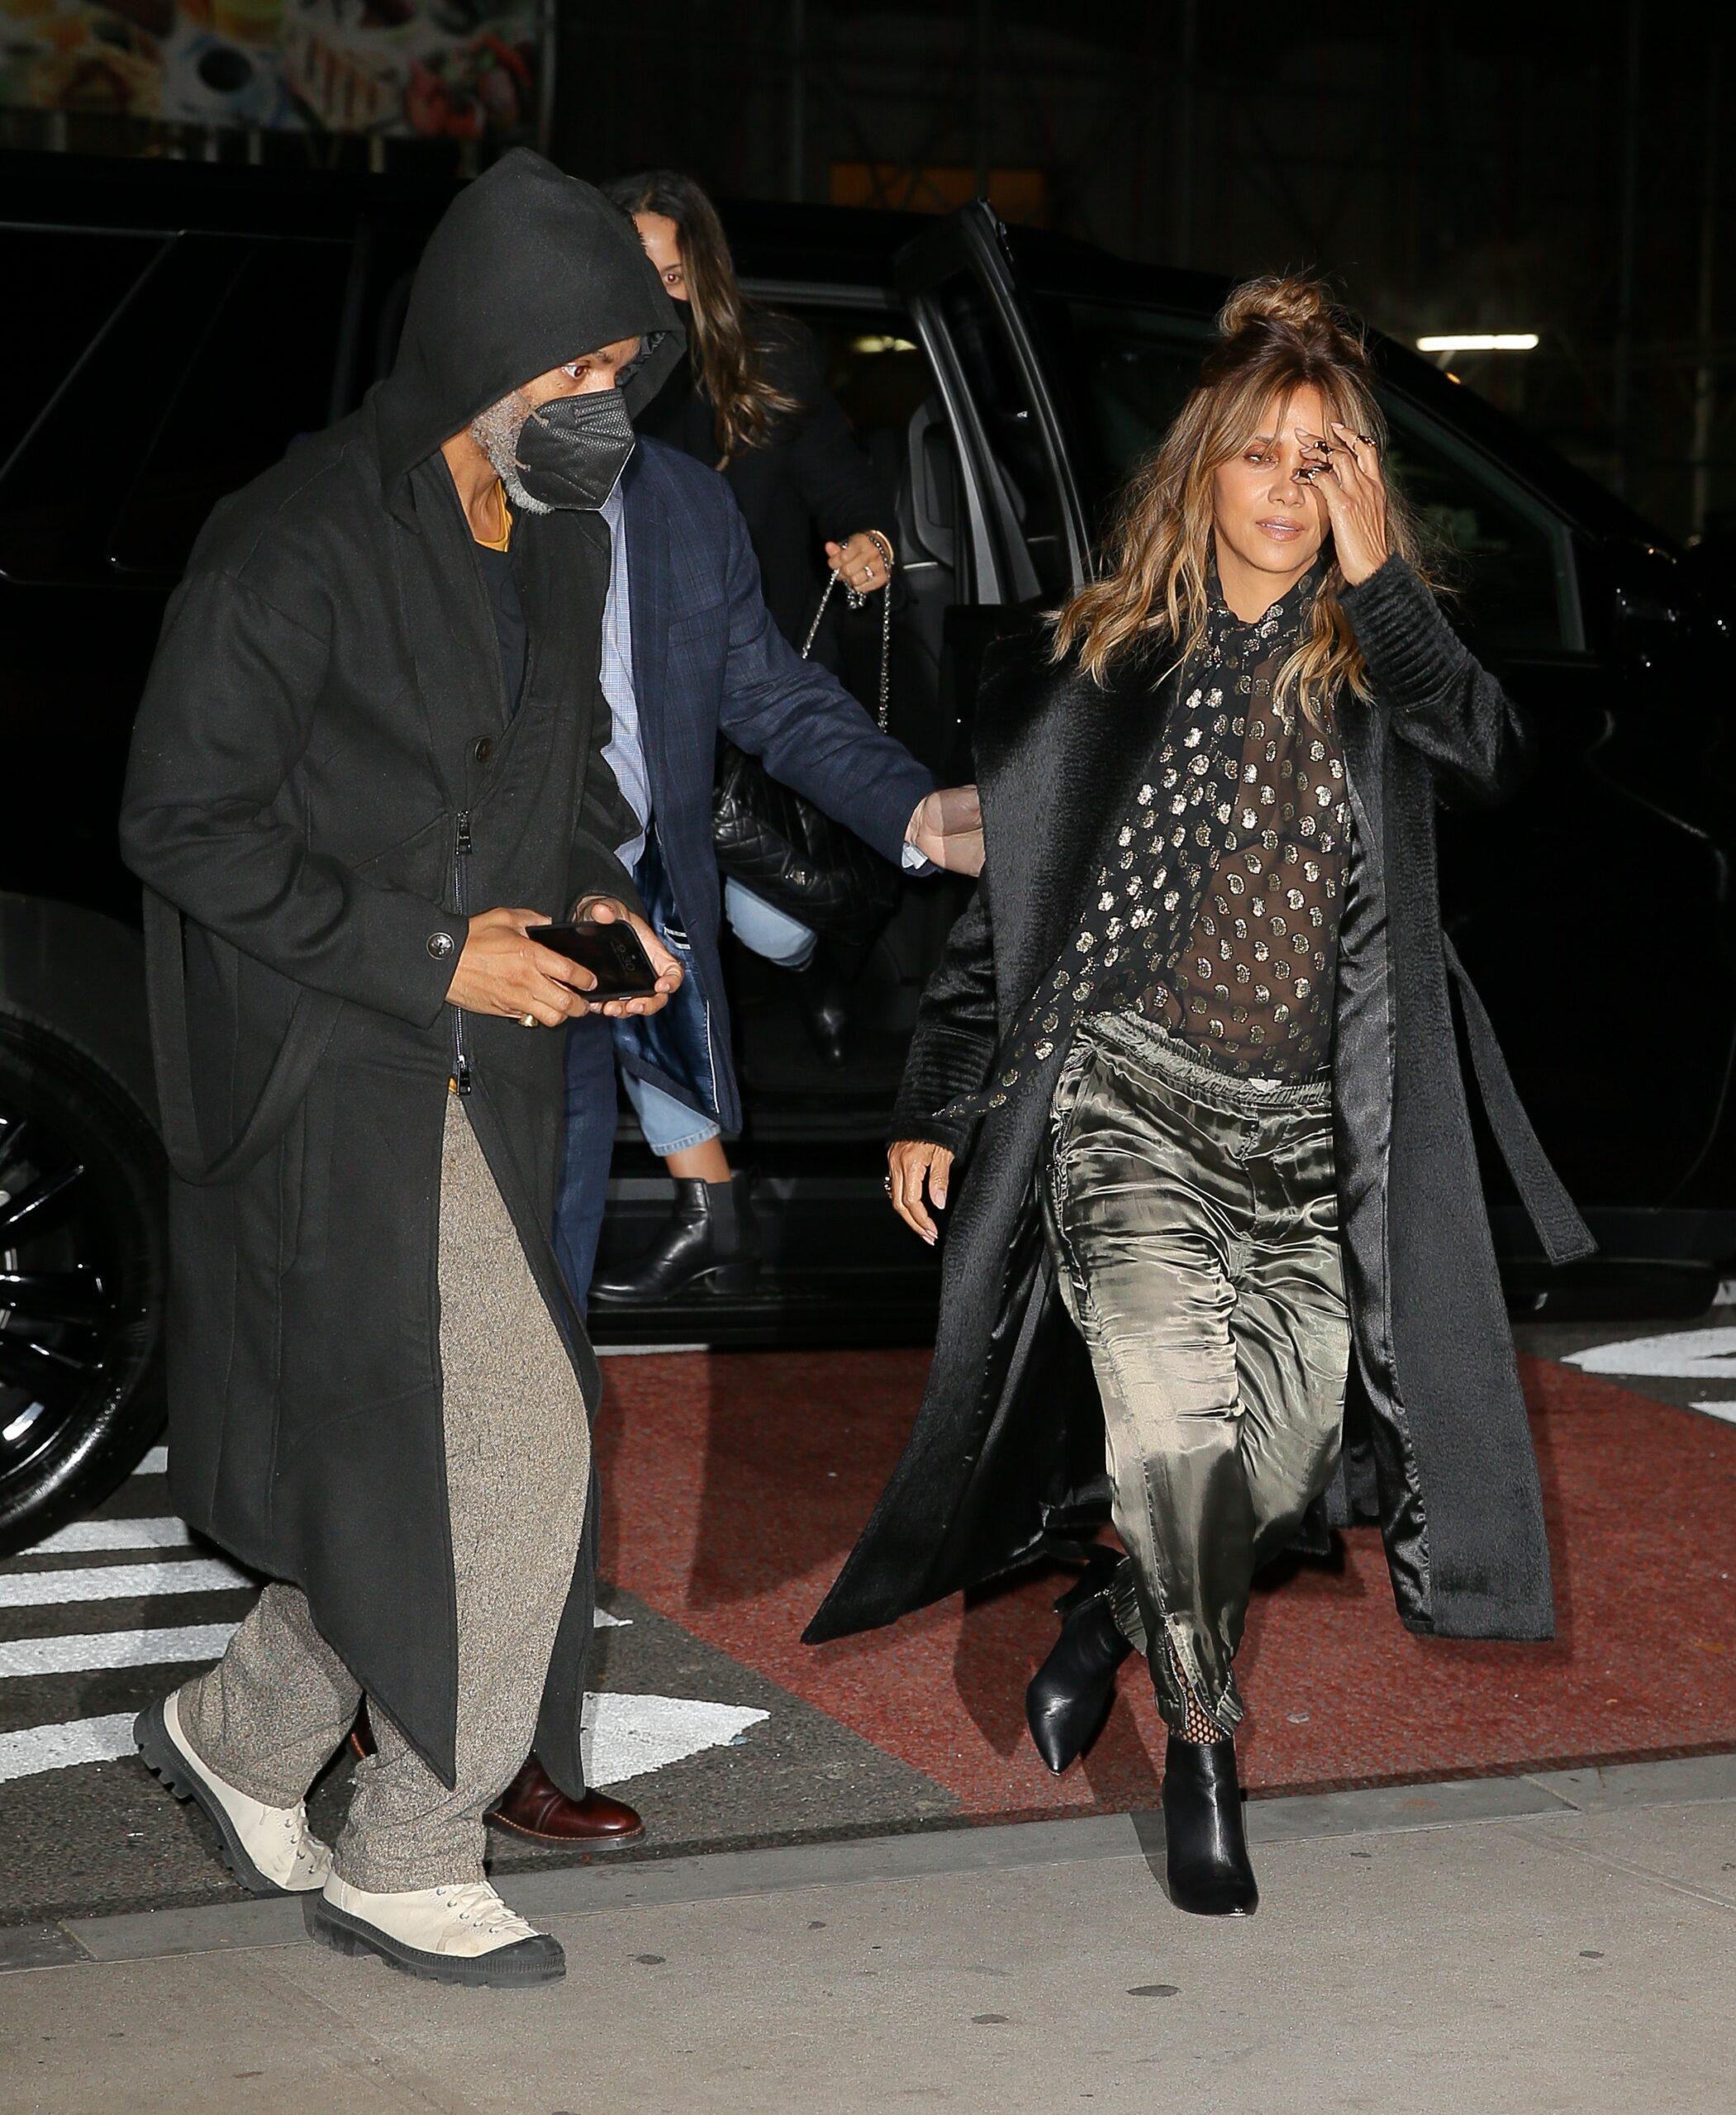 Halle Berry and boyfriend Van Hunt seen arriving at The DGA Theatre in New York City